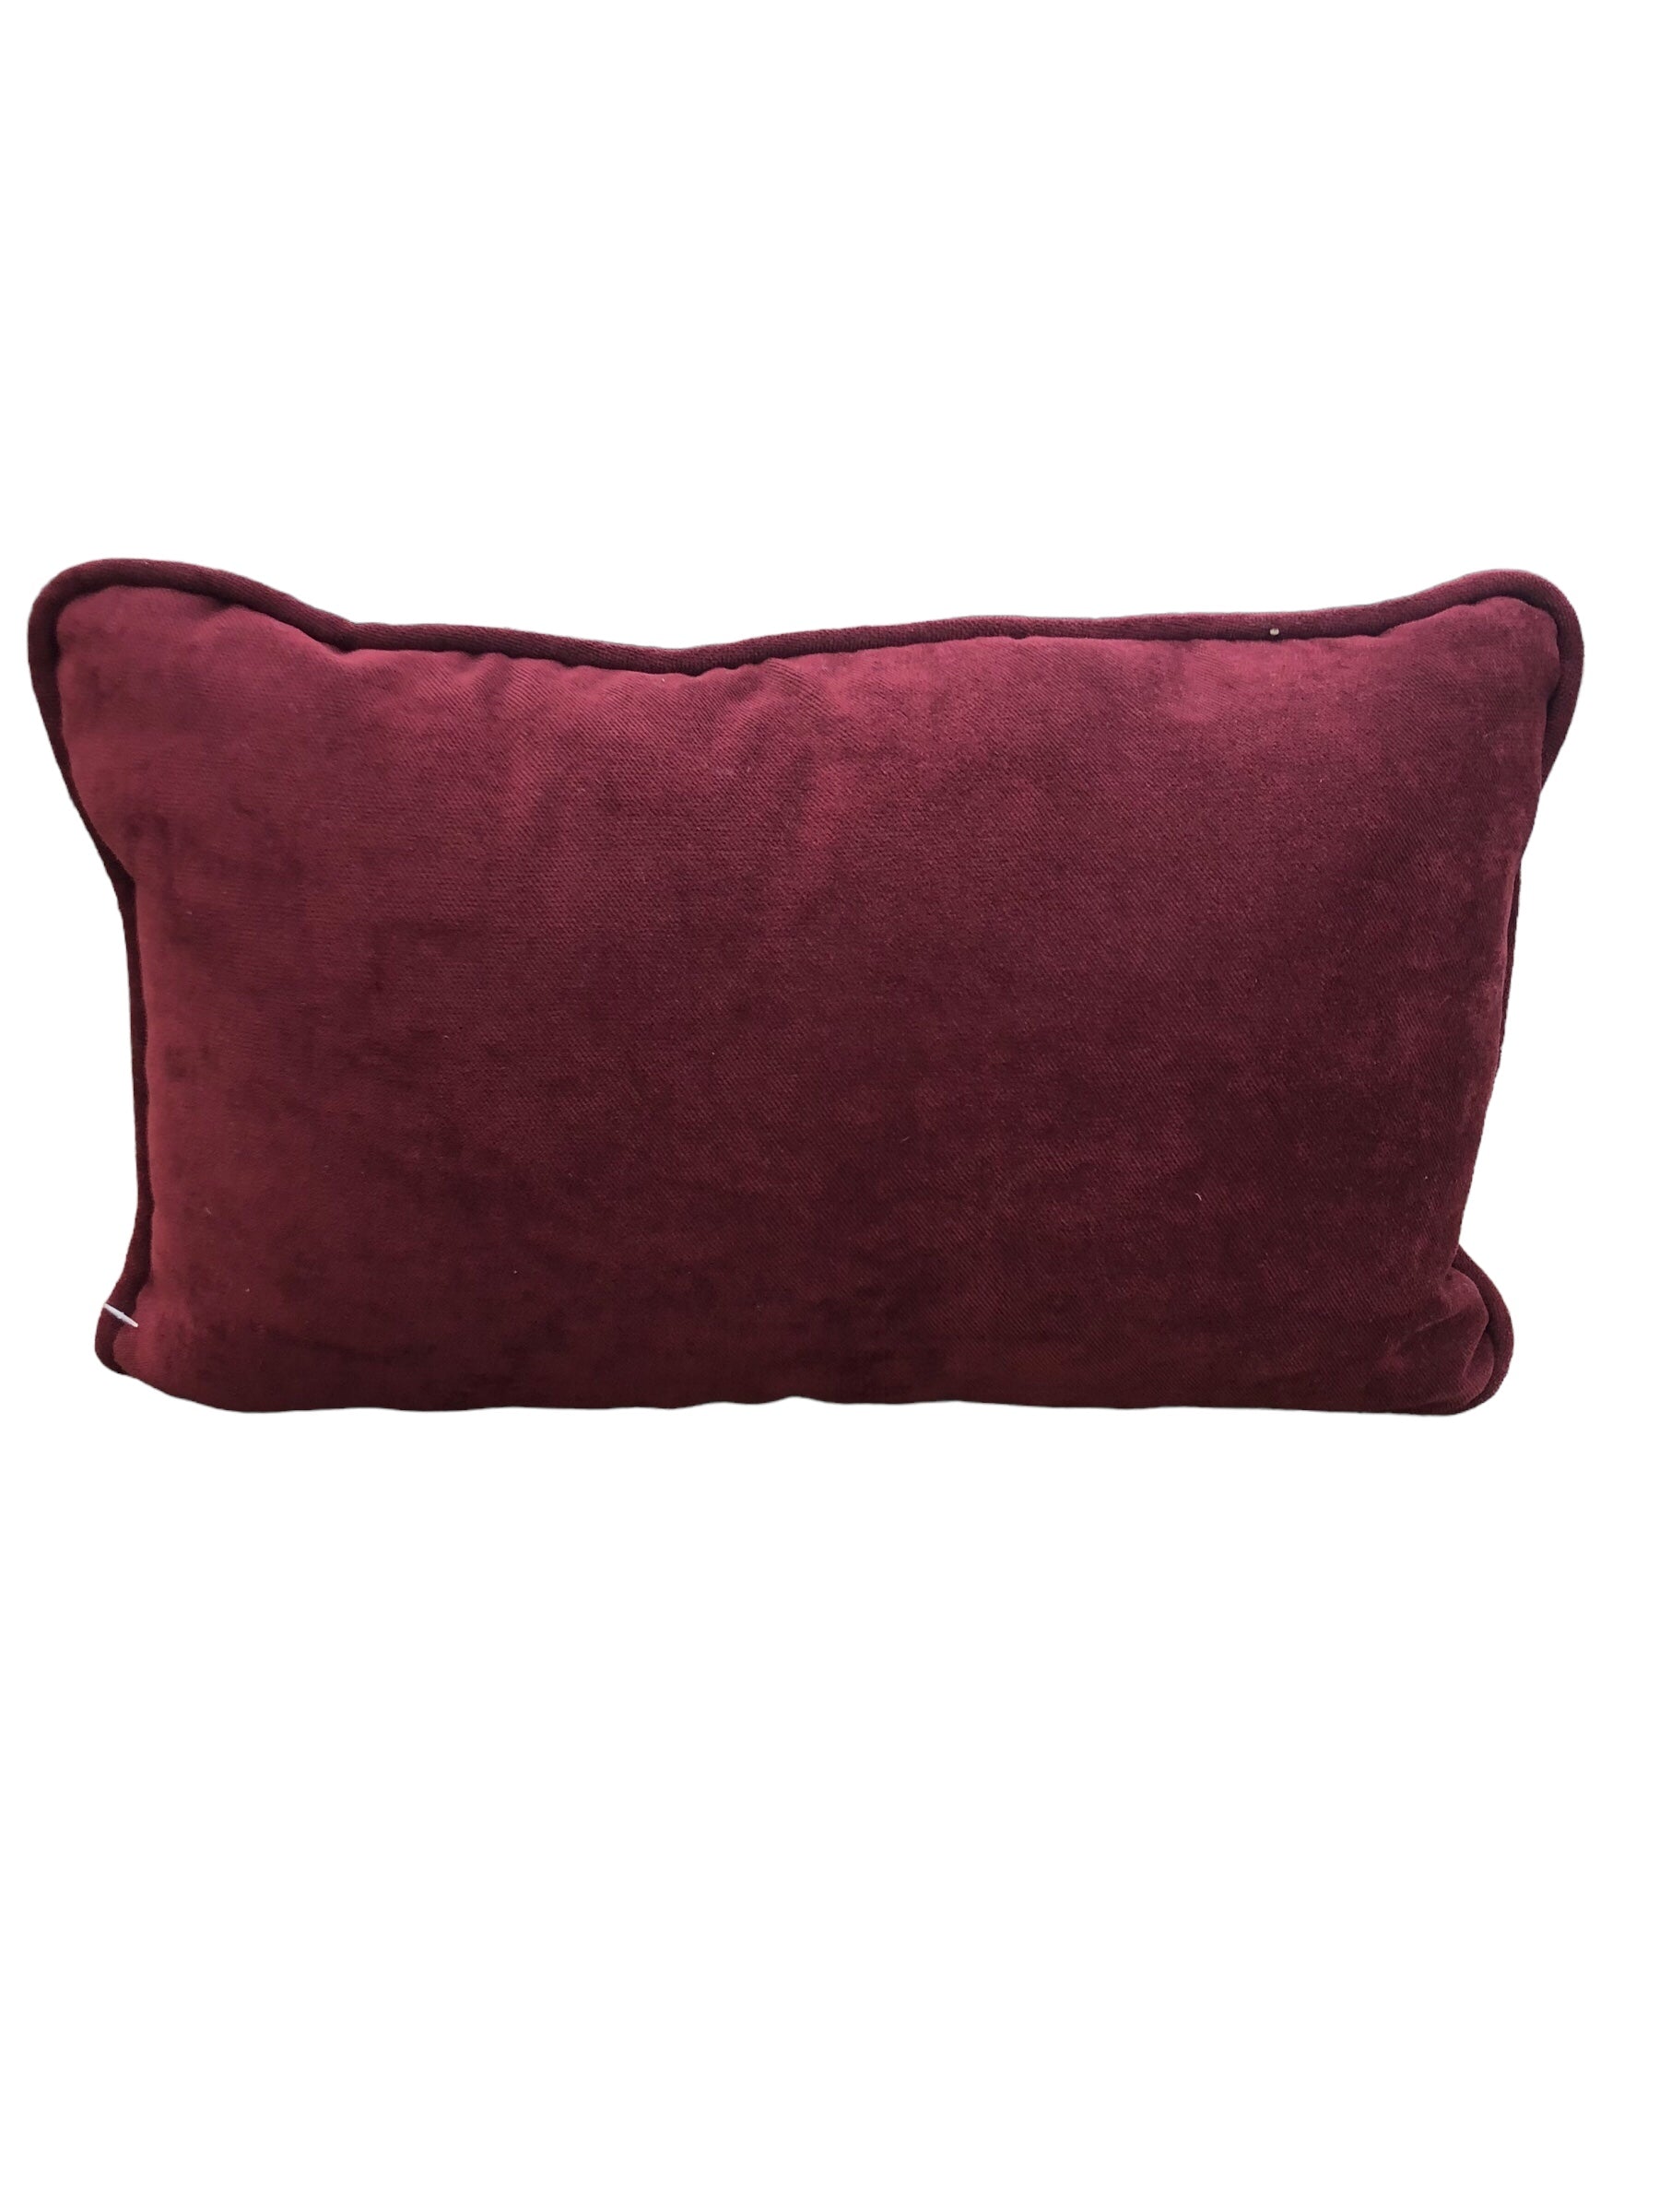 Oblong wine pillow